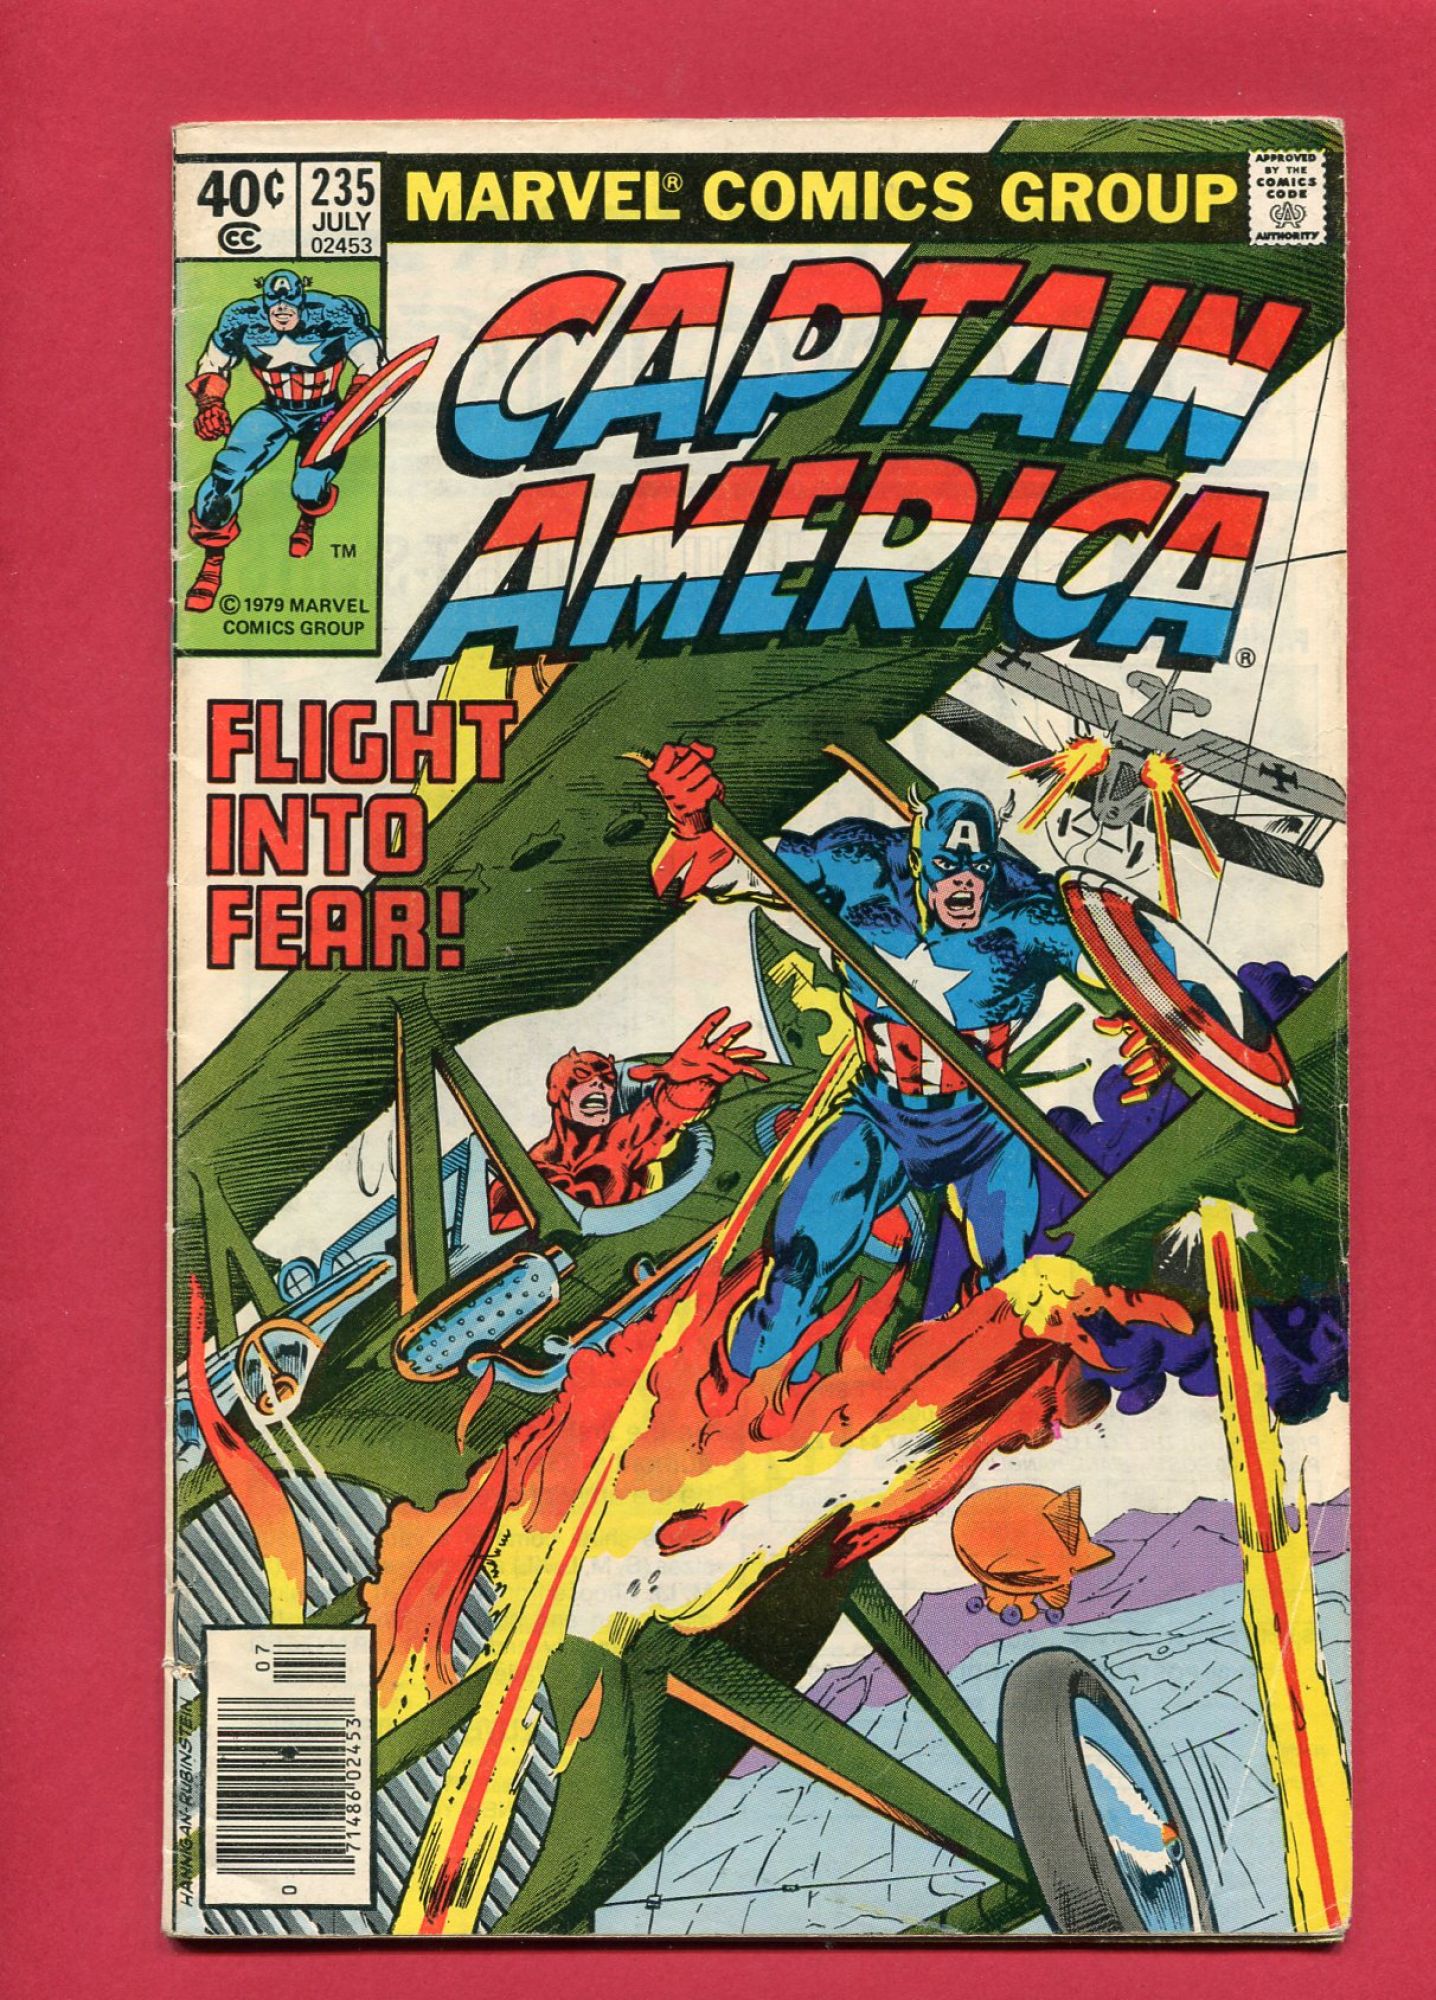 Captain America #235, Jul 1979, 6.0 FN